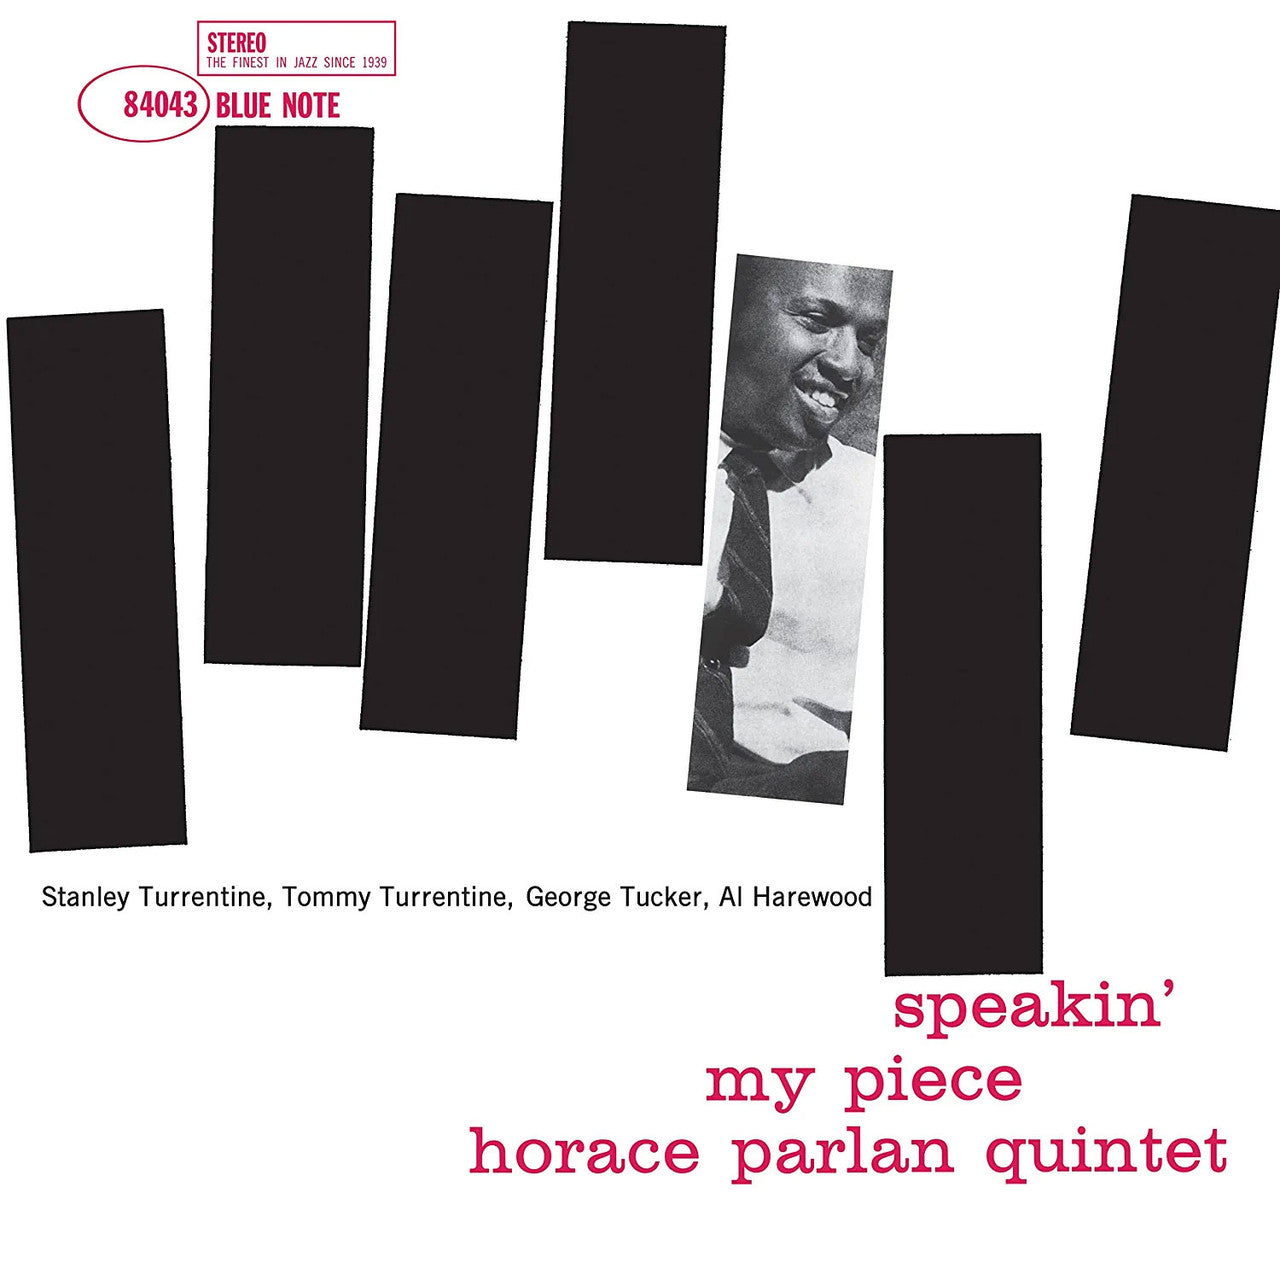 Horace Parlan Quintet - Speakin' My Piece - Blue Note Classic LP